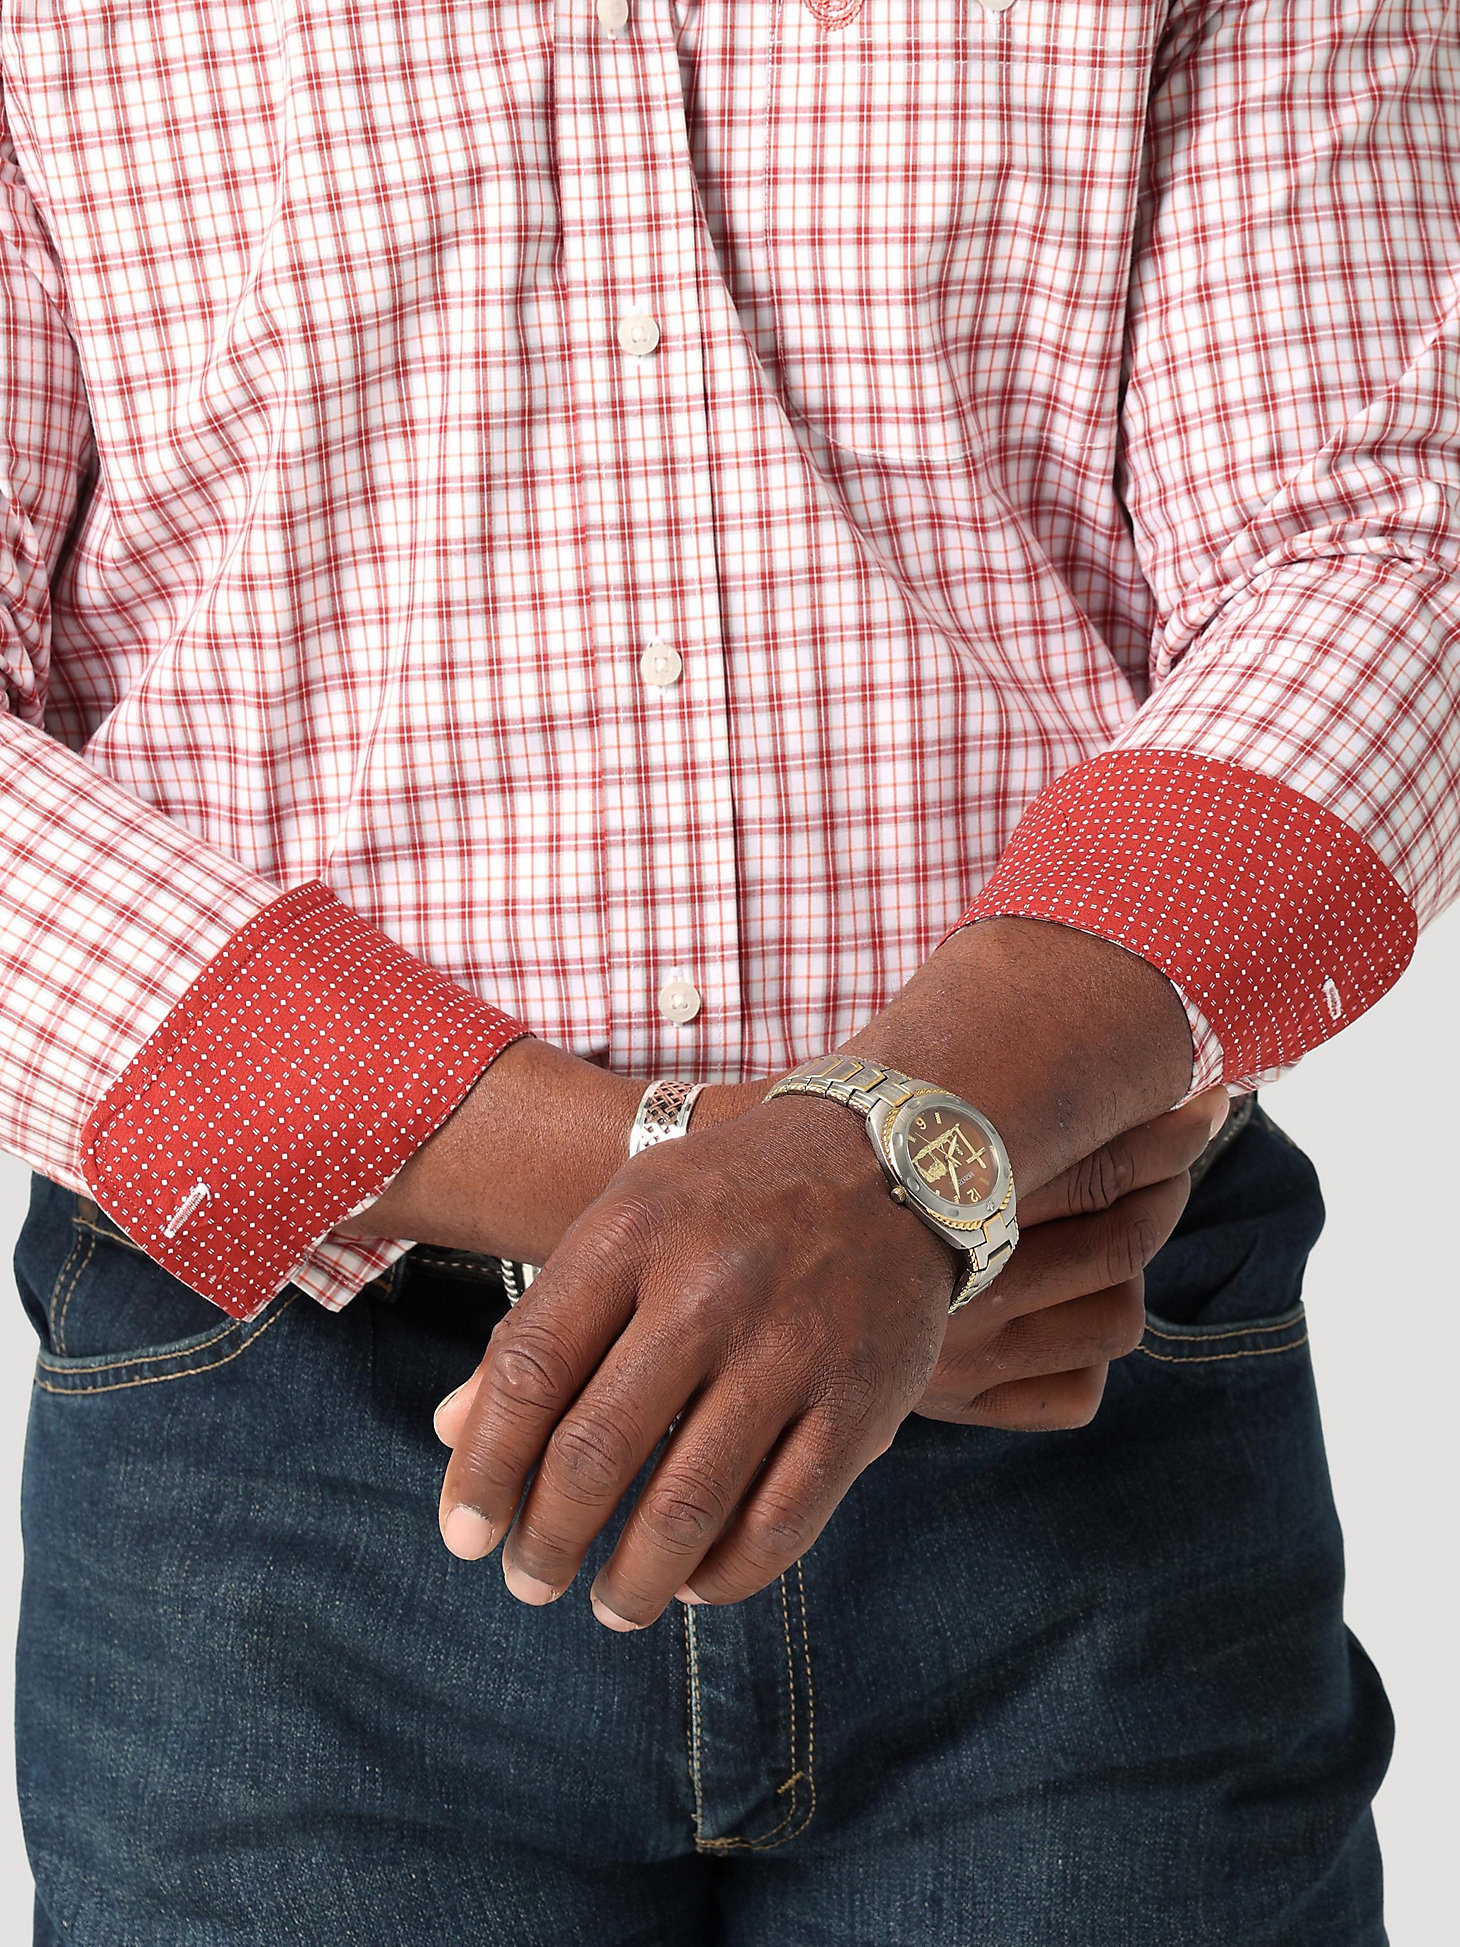 Men's George Strait Long Sleeve Button Down One Pocket Plaid Shirt in Brick Red Checks alternative view 3